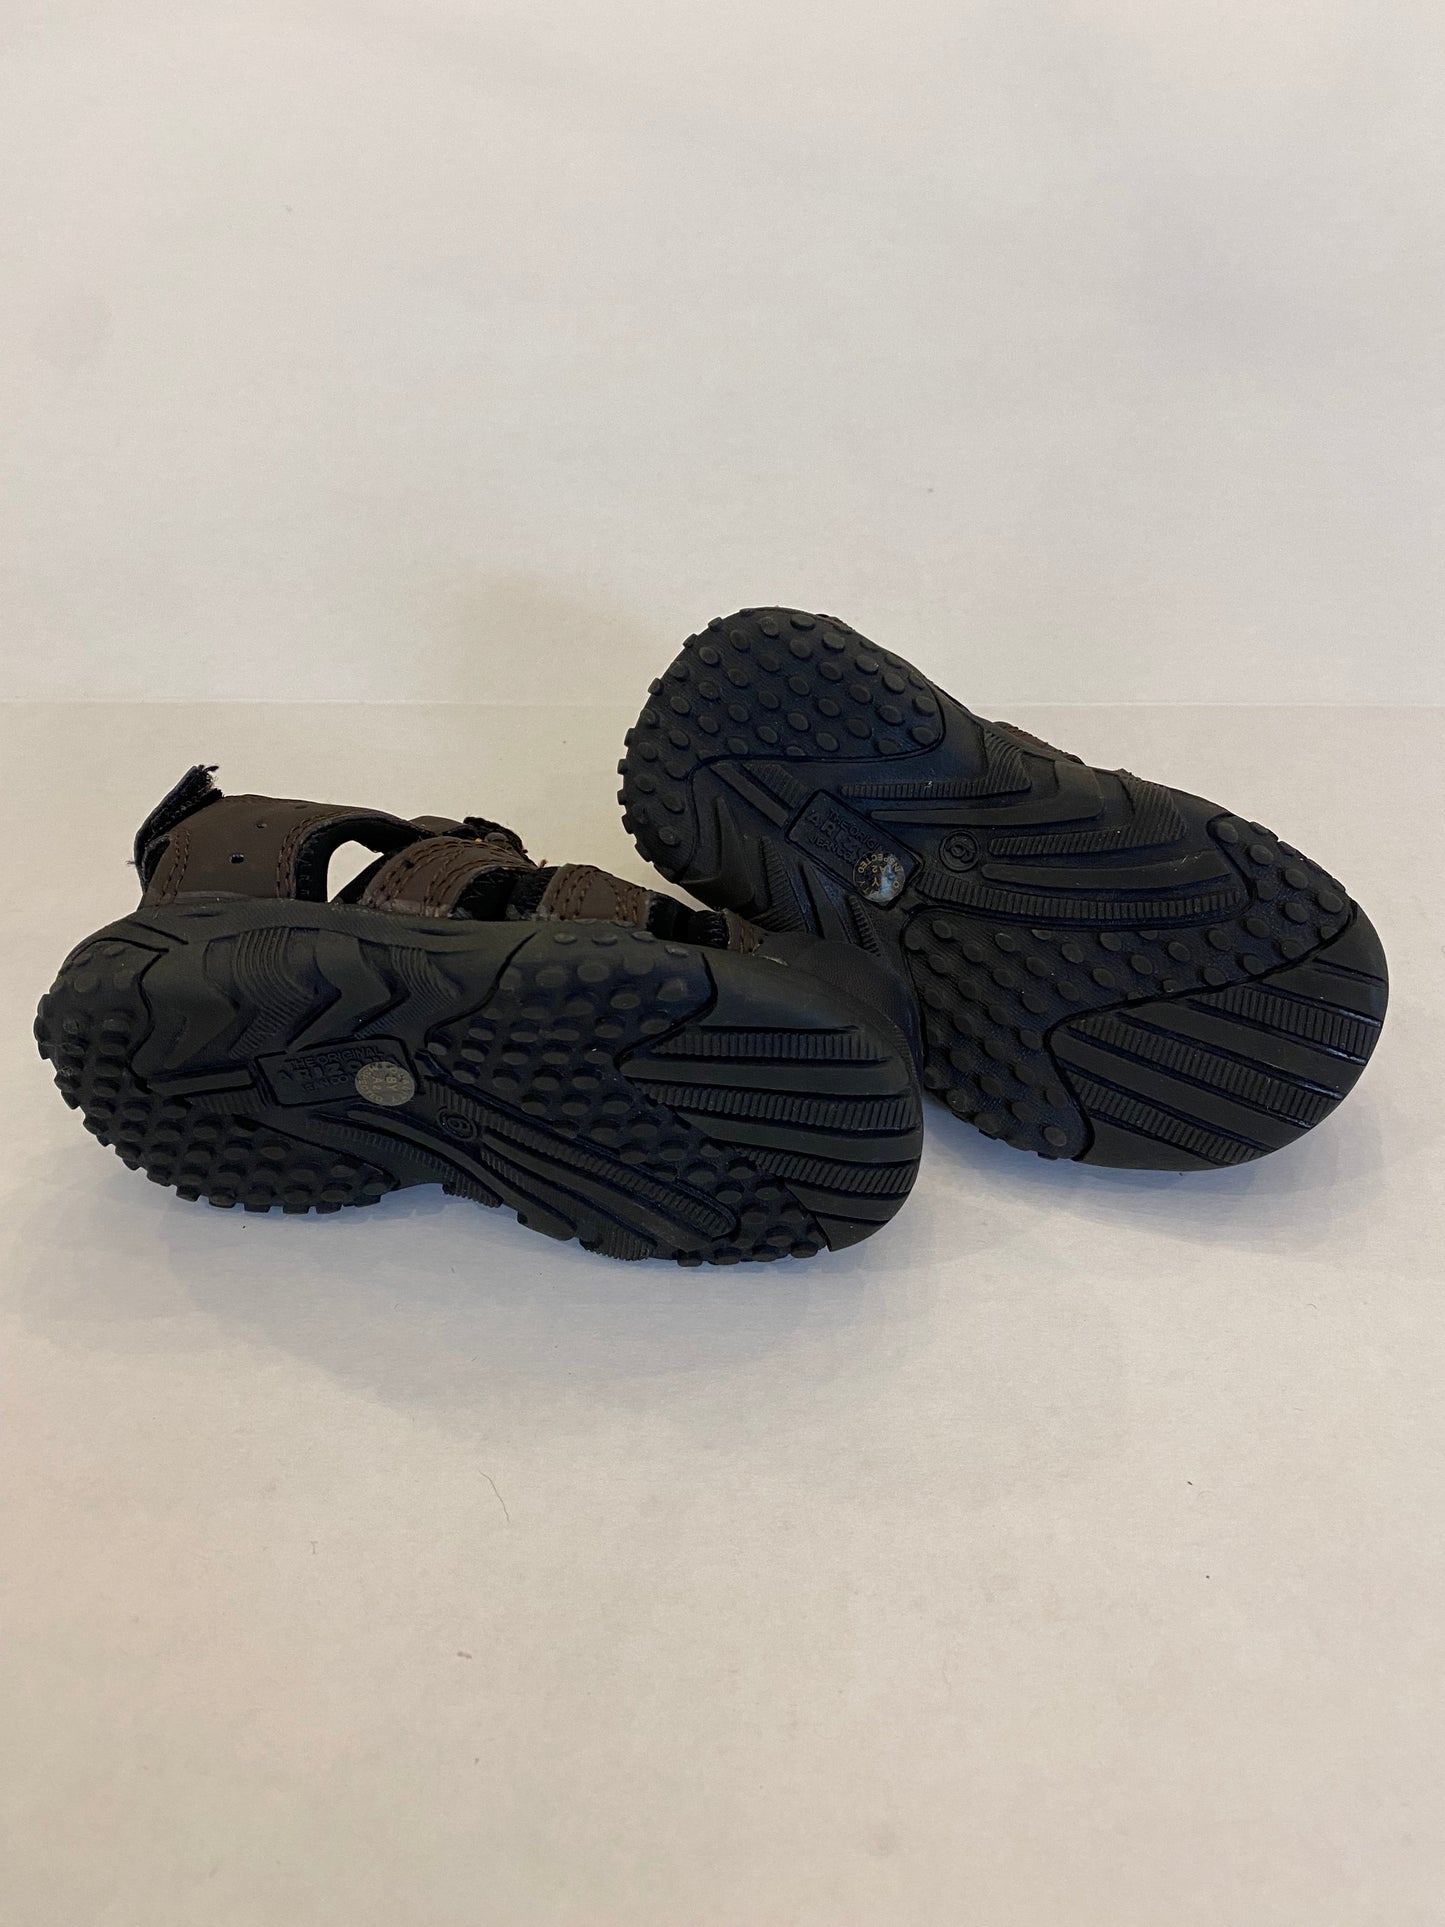 Boys 6T, Arizona - brown sandals